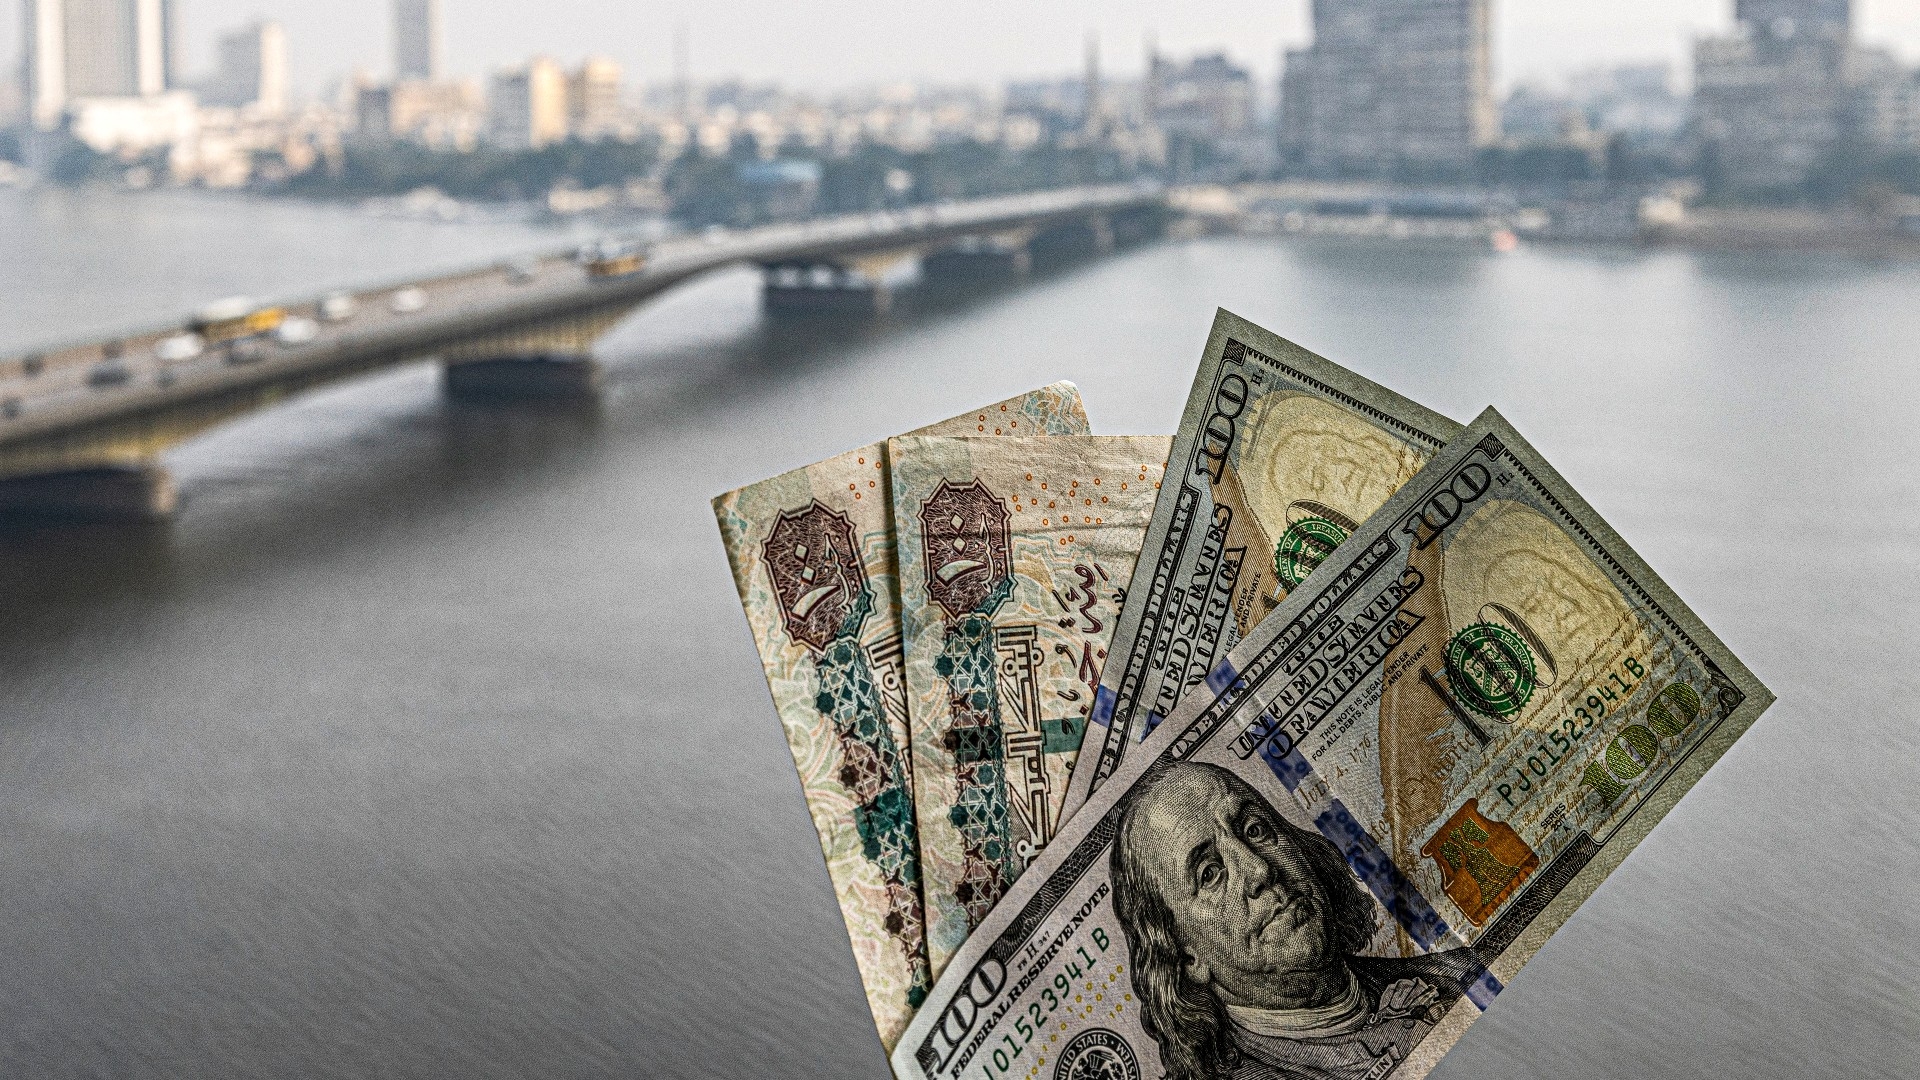 U.S. dollar exchange rate keeps slightly weakening Sunday - EgyptToday